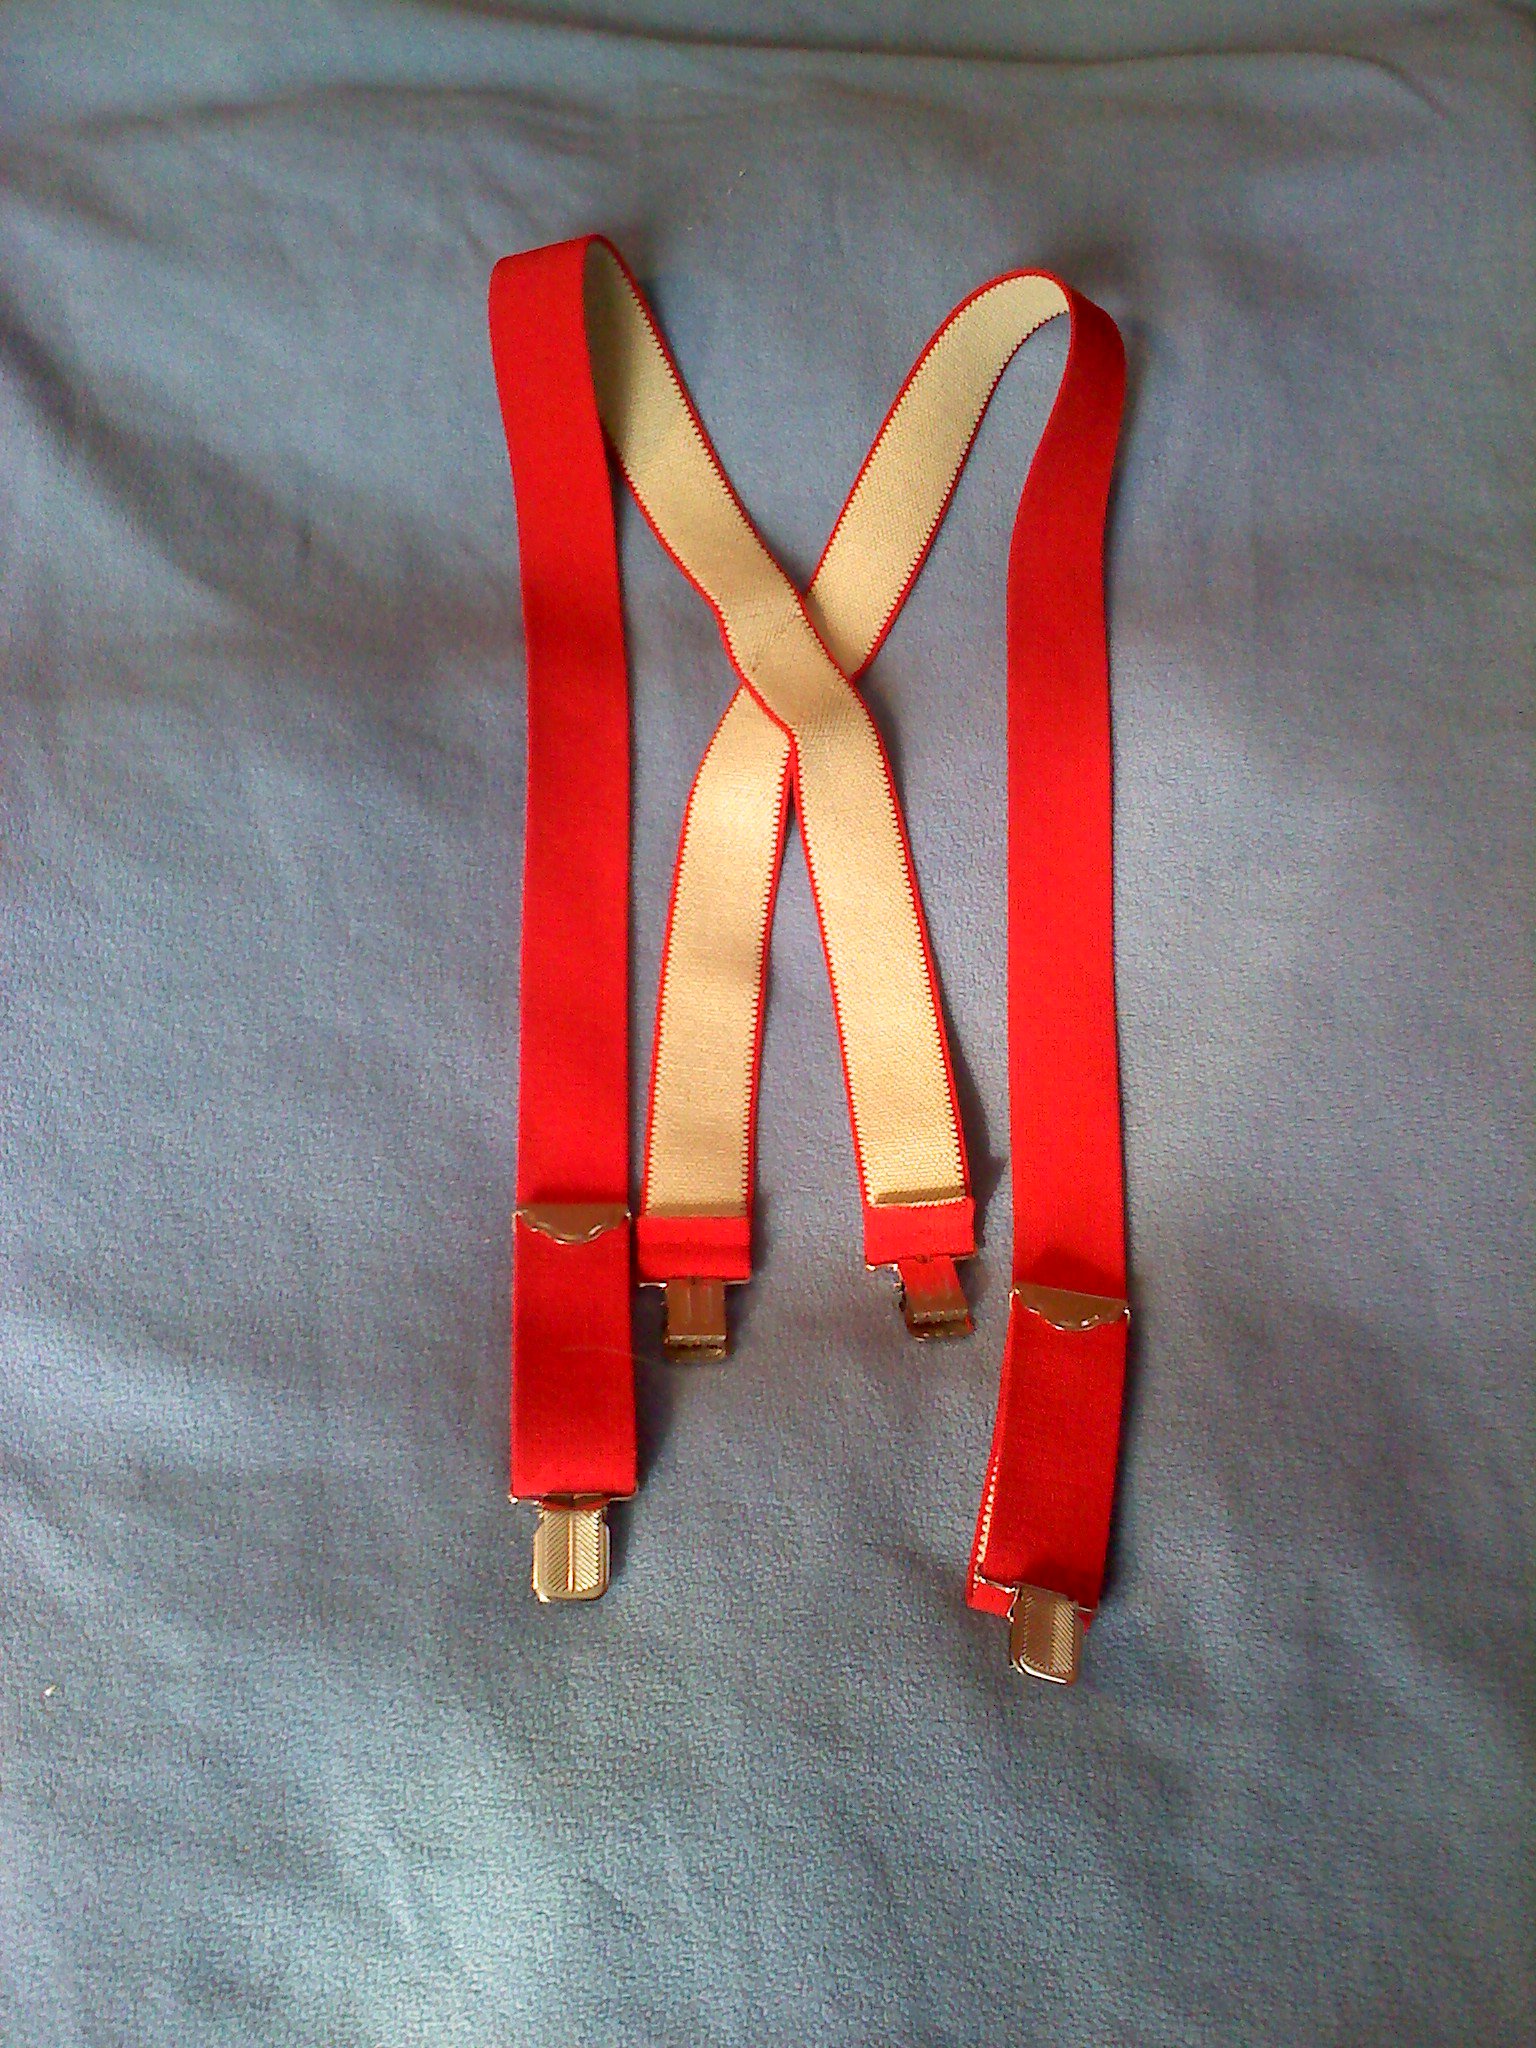 Suspenders.